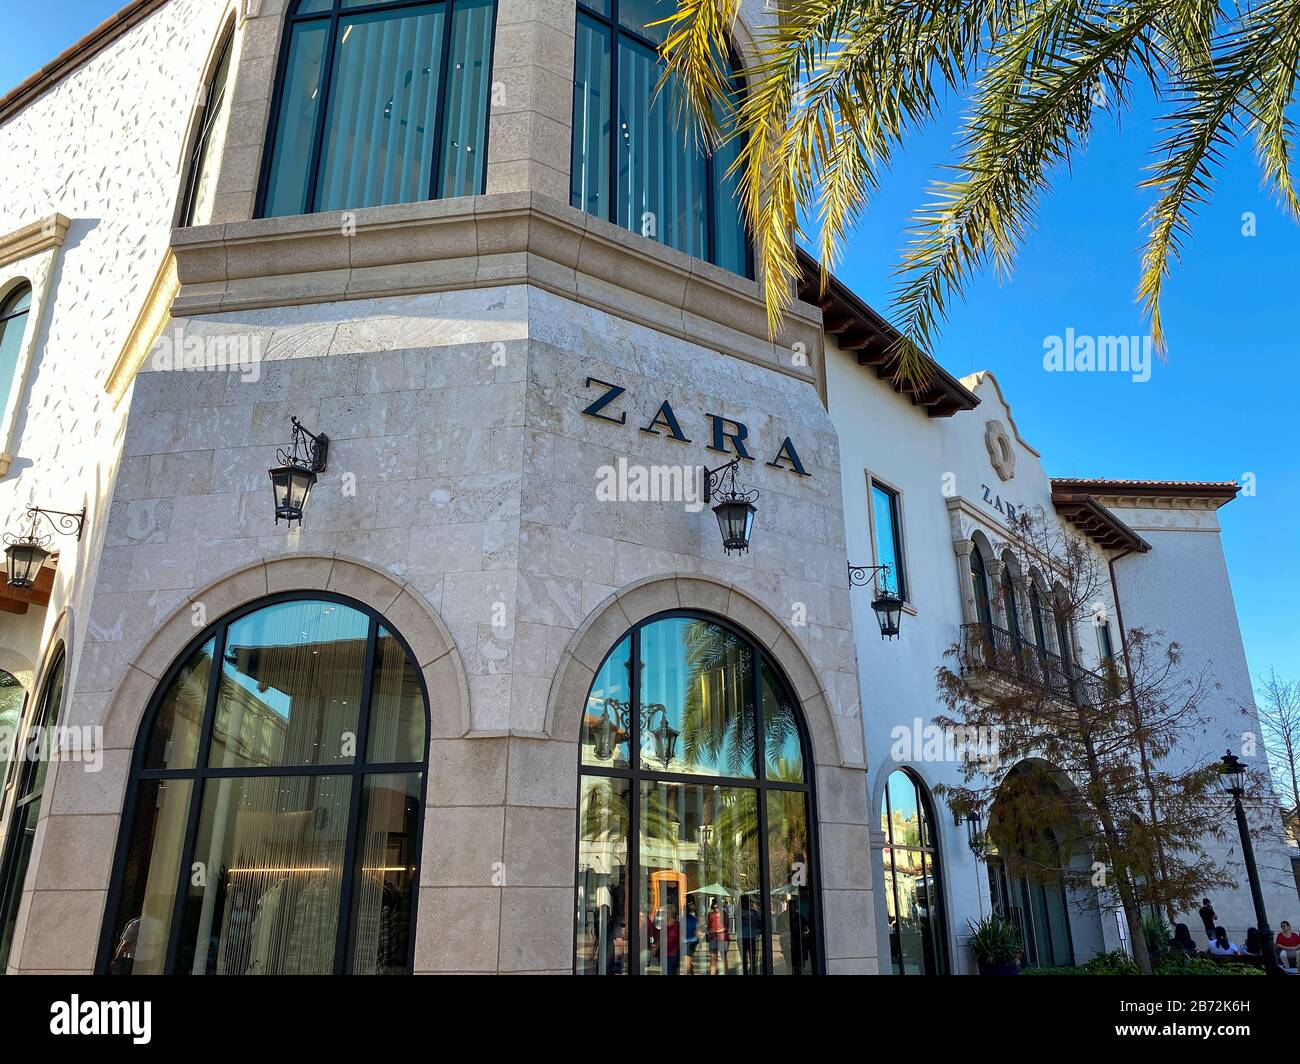 Orlando, FL/USA-2/13/20: A Zara clothing retail store in an outdoor mall in  Orlando, FL Stock Photo - Alamy